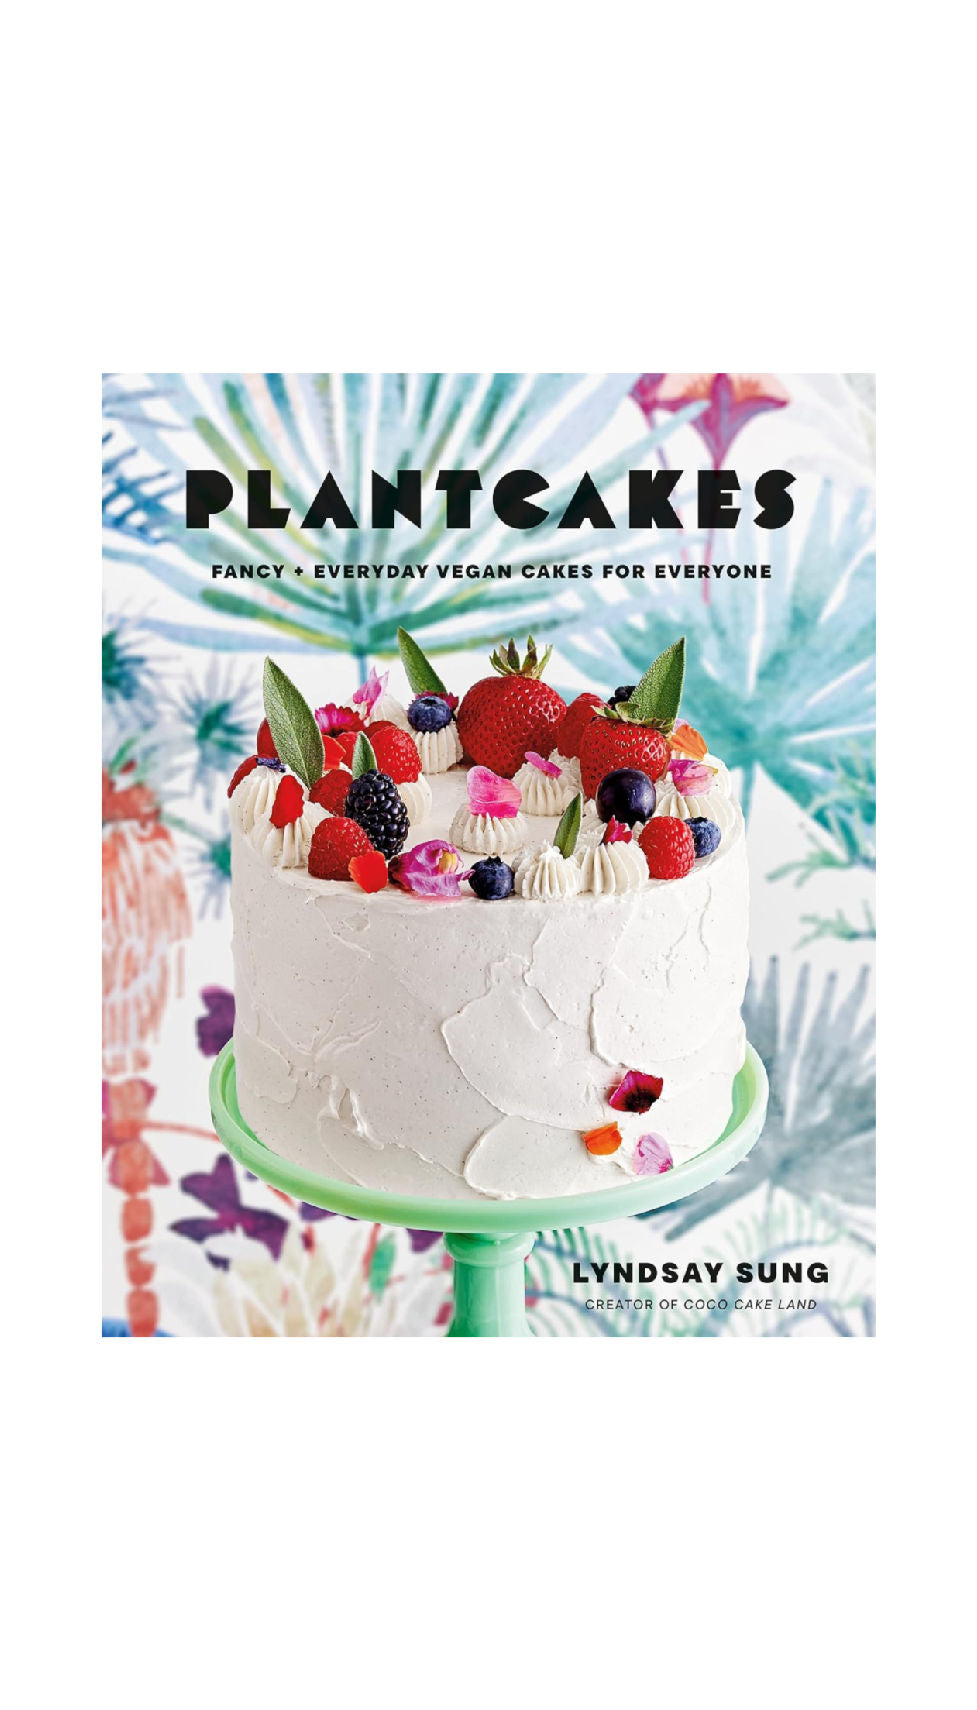 Plantcakes: Fancy + Everyday Vegan Cakes for Everyone